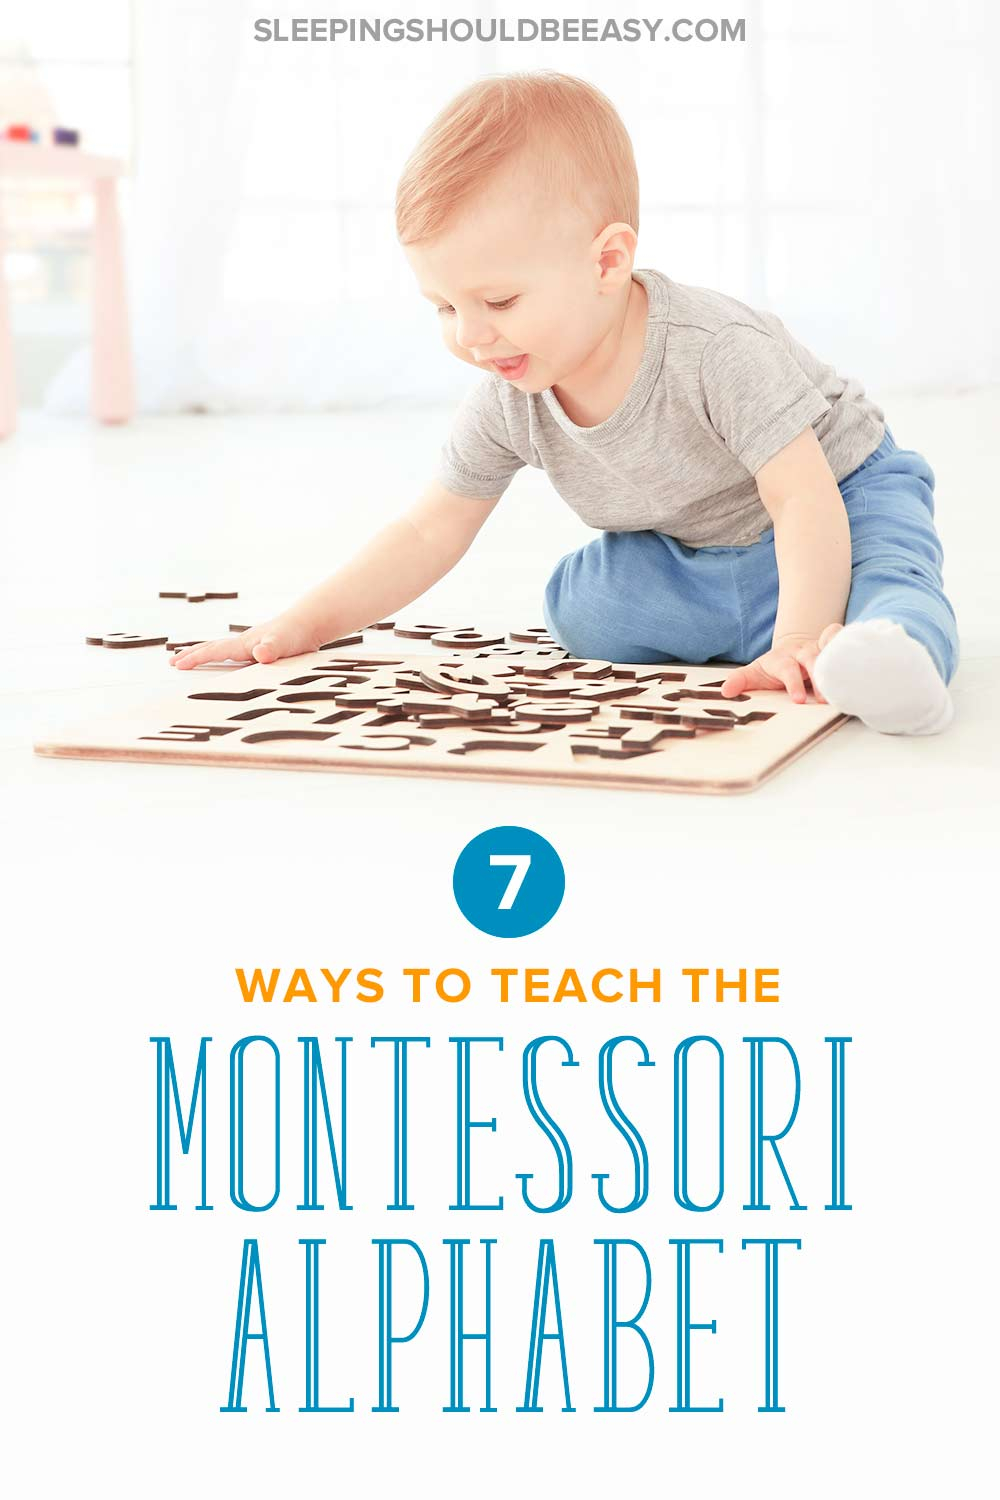 Teaching The Montessori Alphabet | Sleeping Should Be Easy